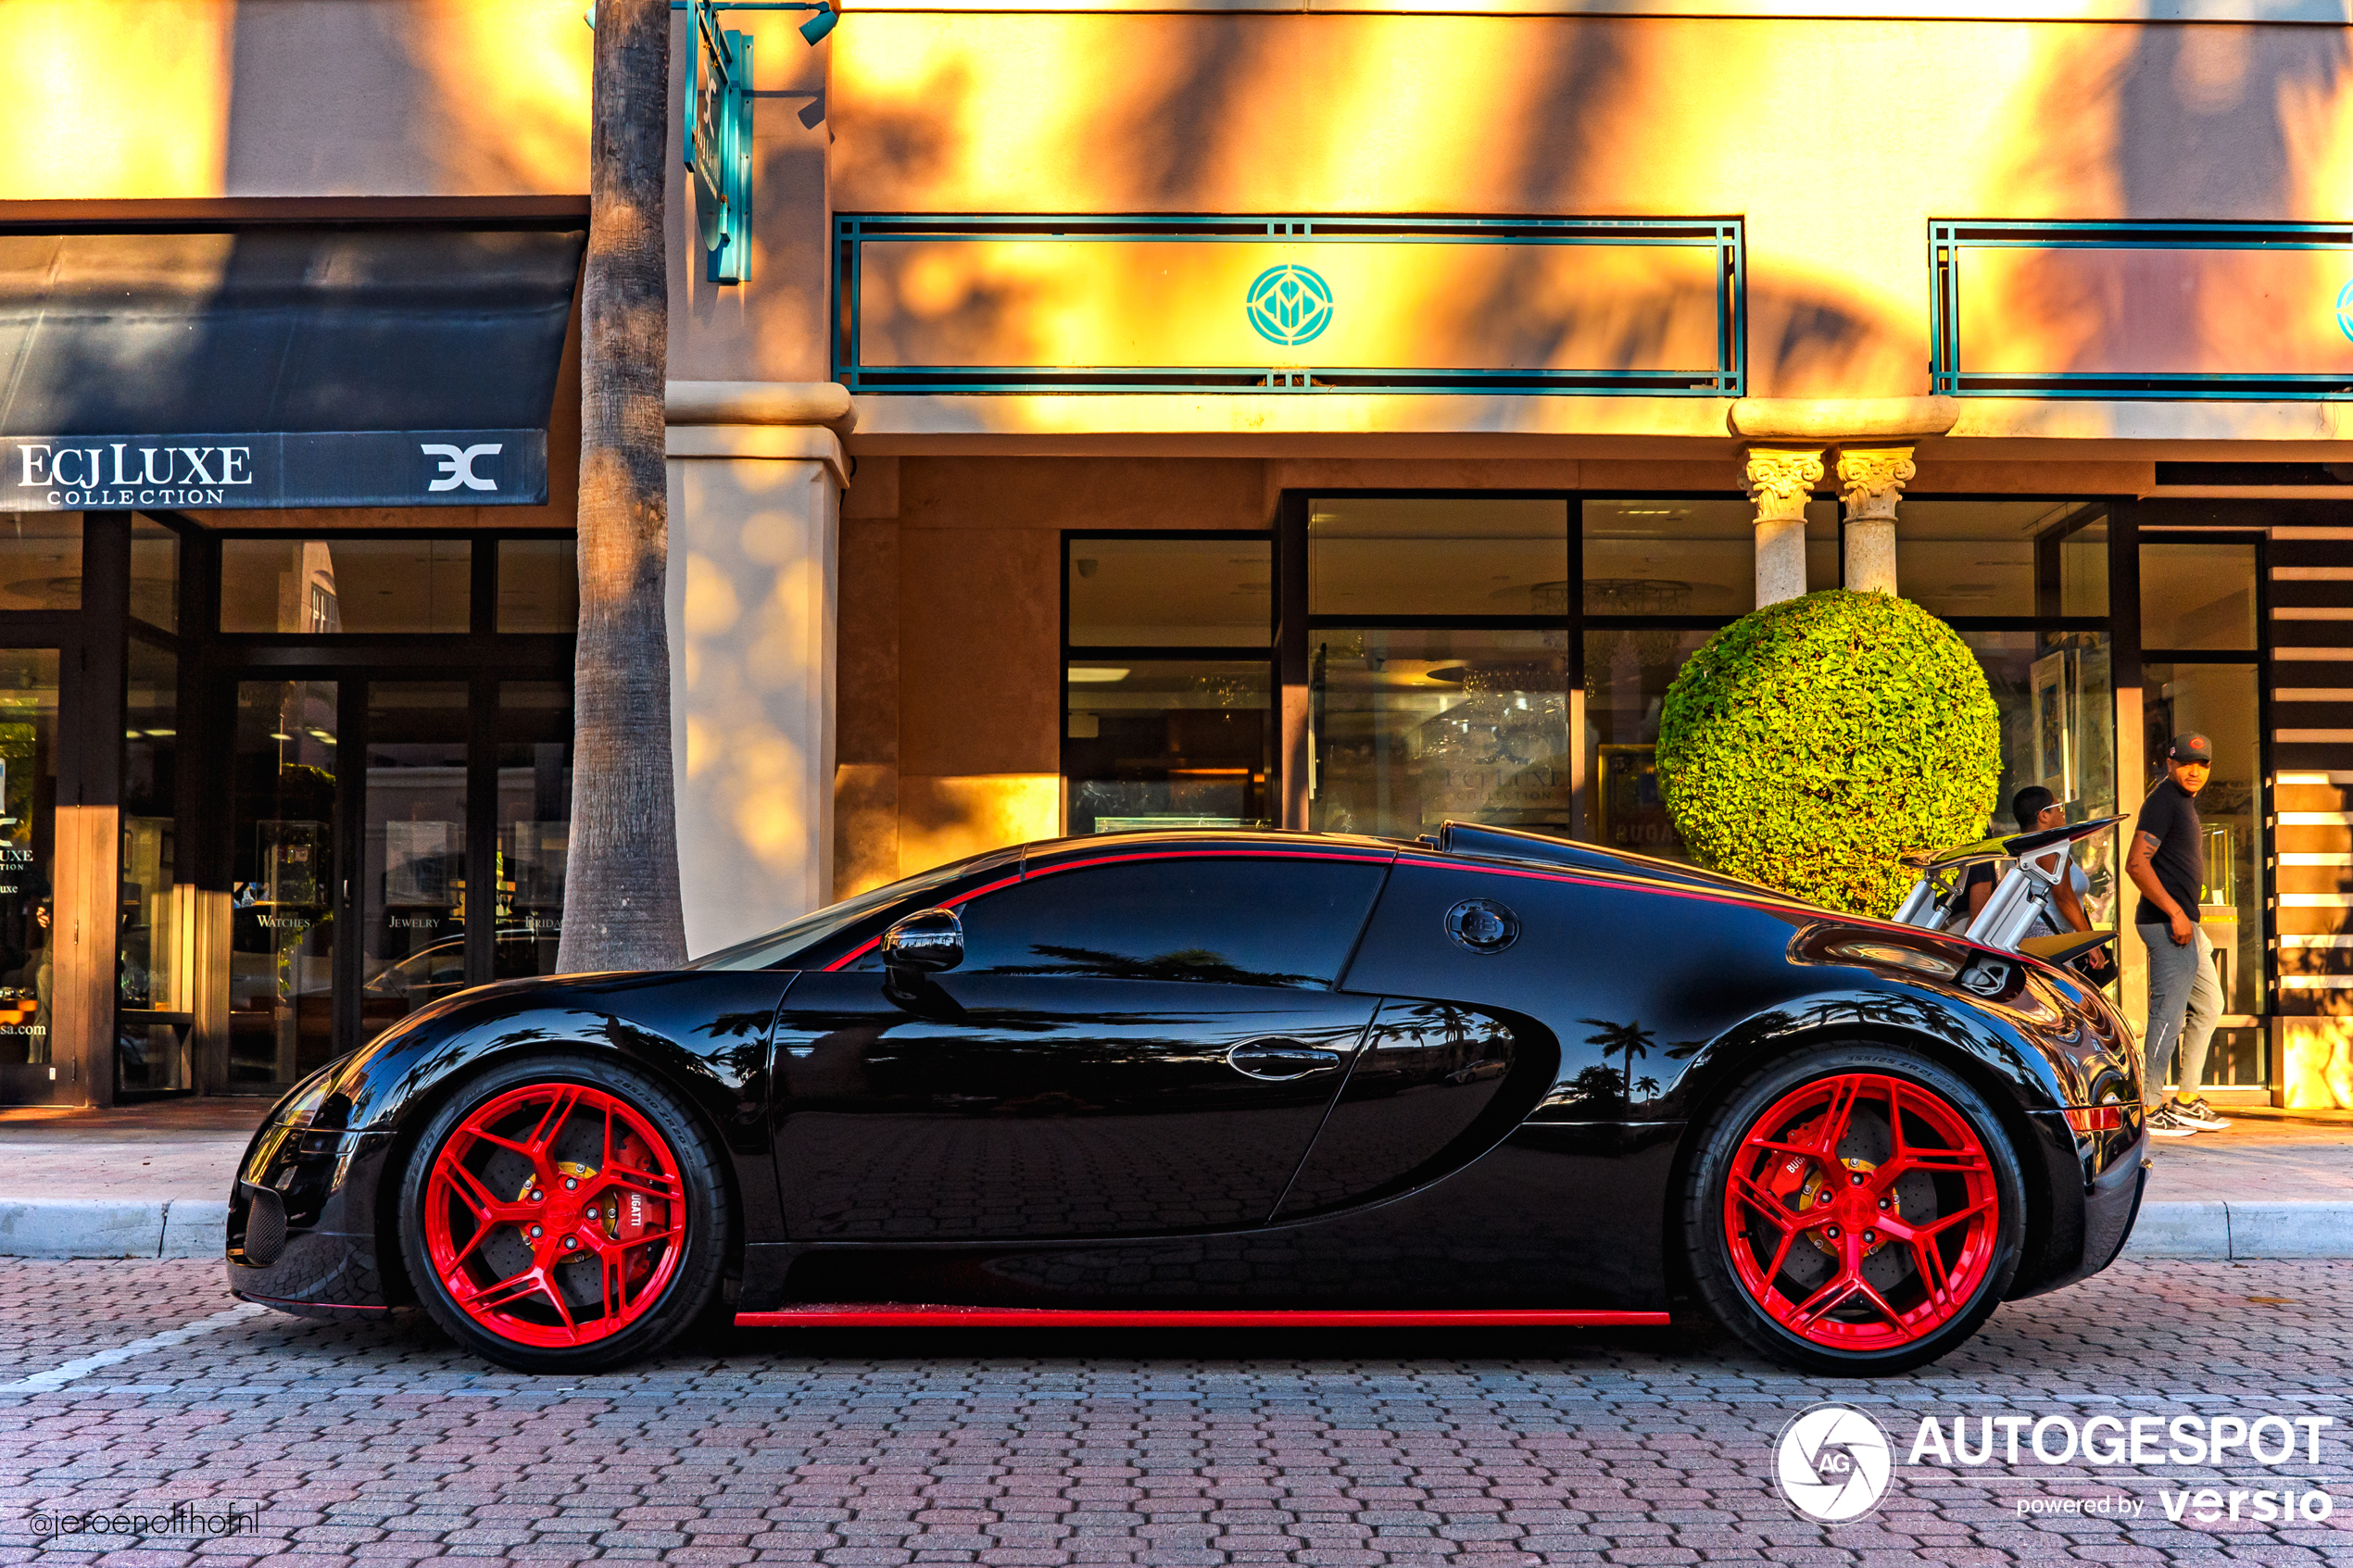 A slightly different Bugatti shows up in Boca Raton